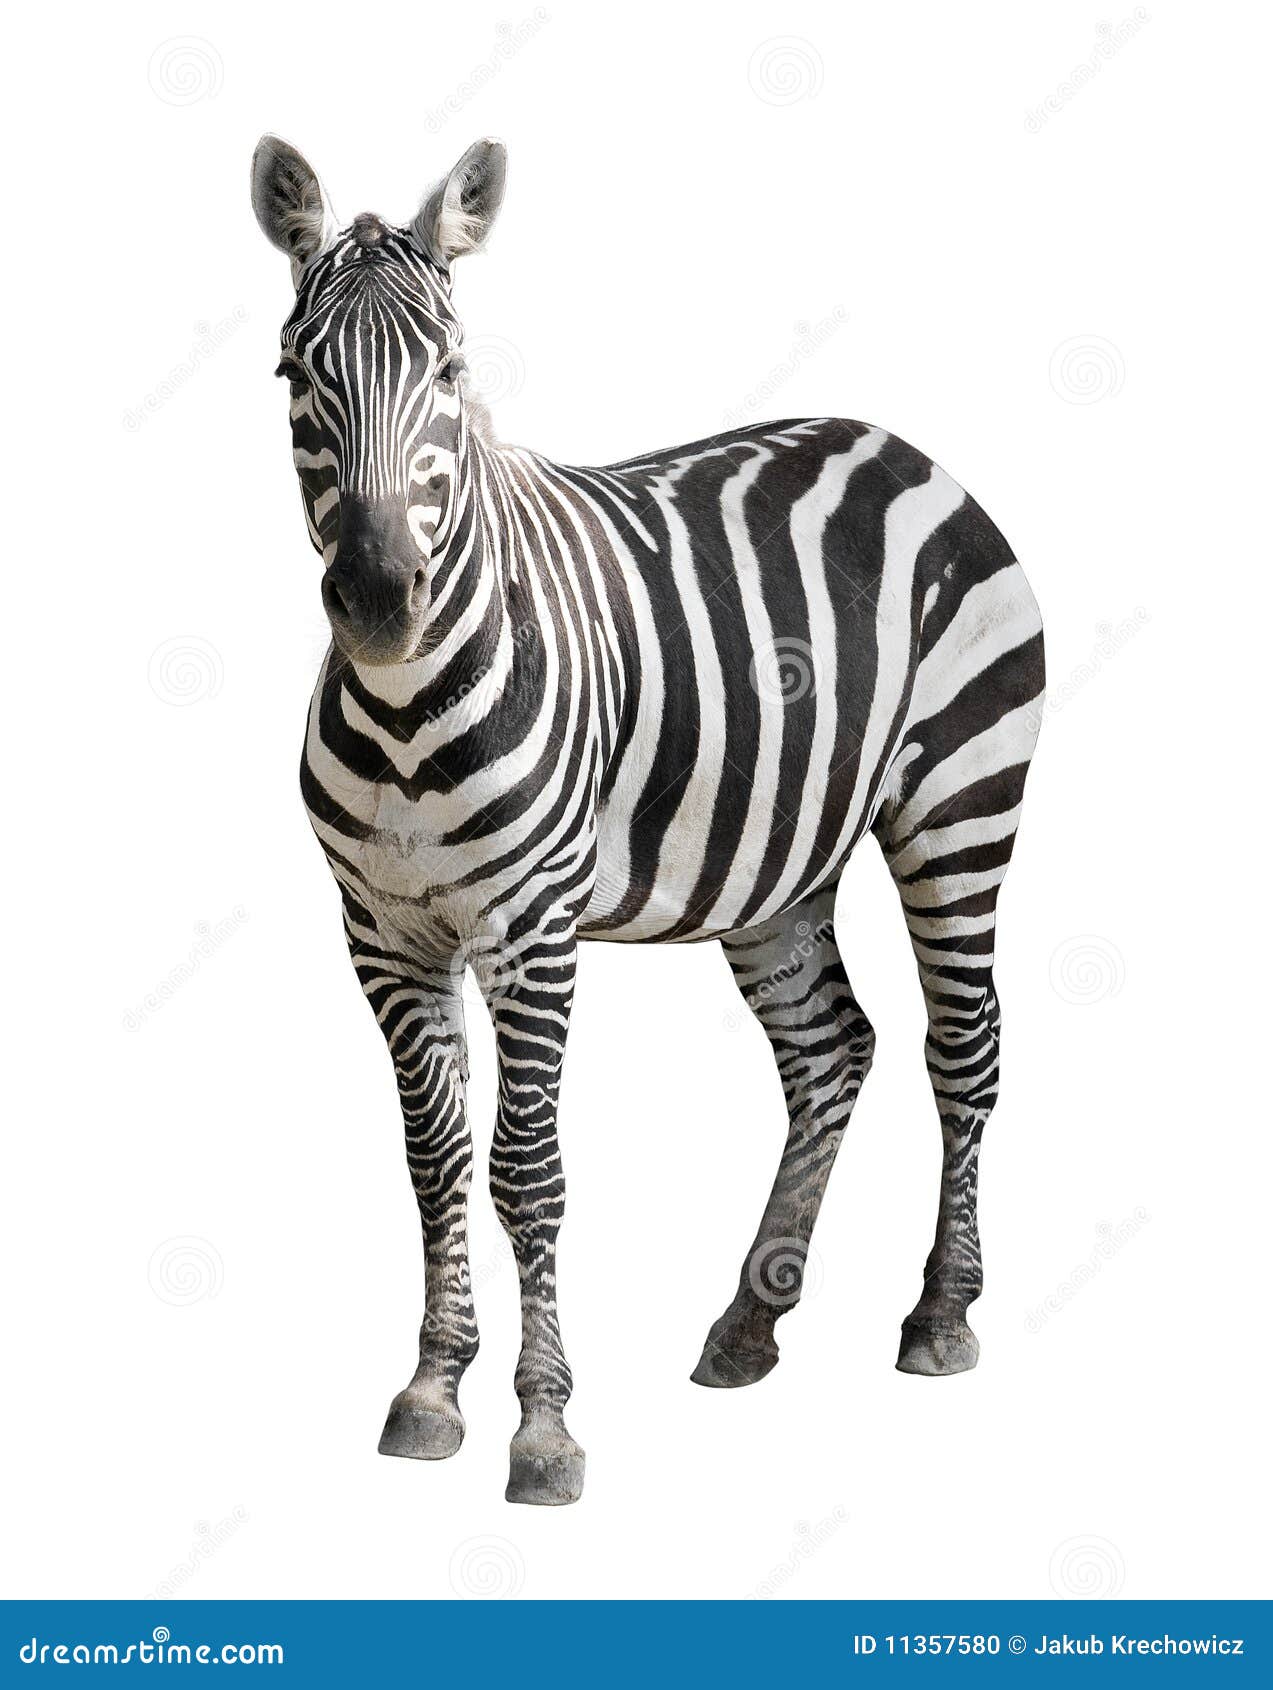 zebra  on white